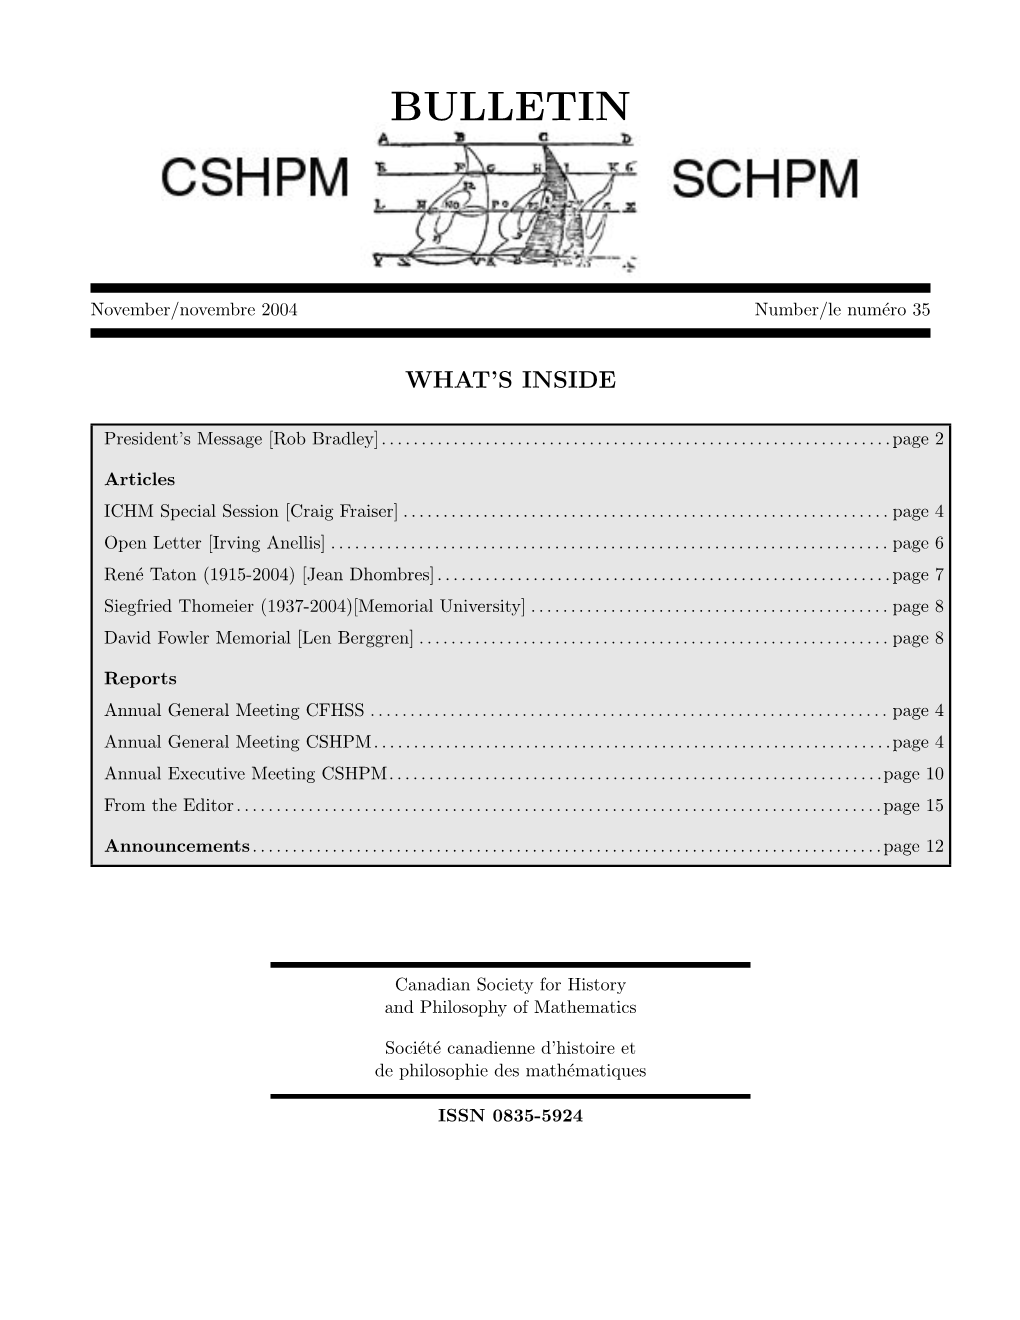 CSHPM Bulletin, November 2004